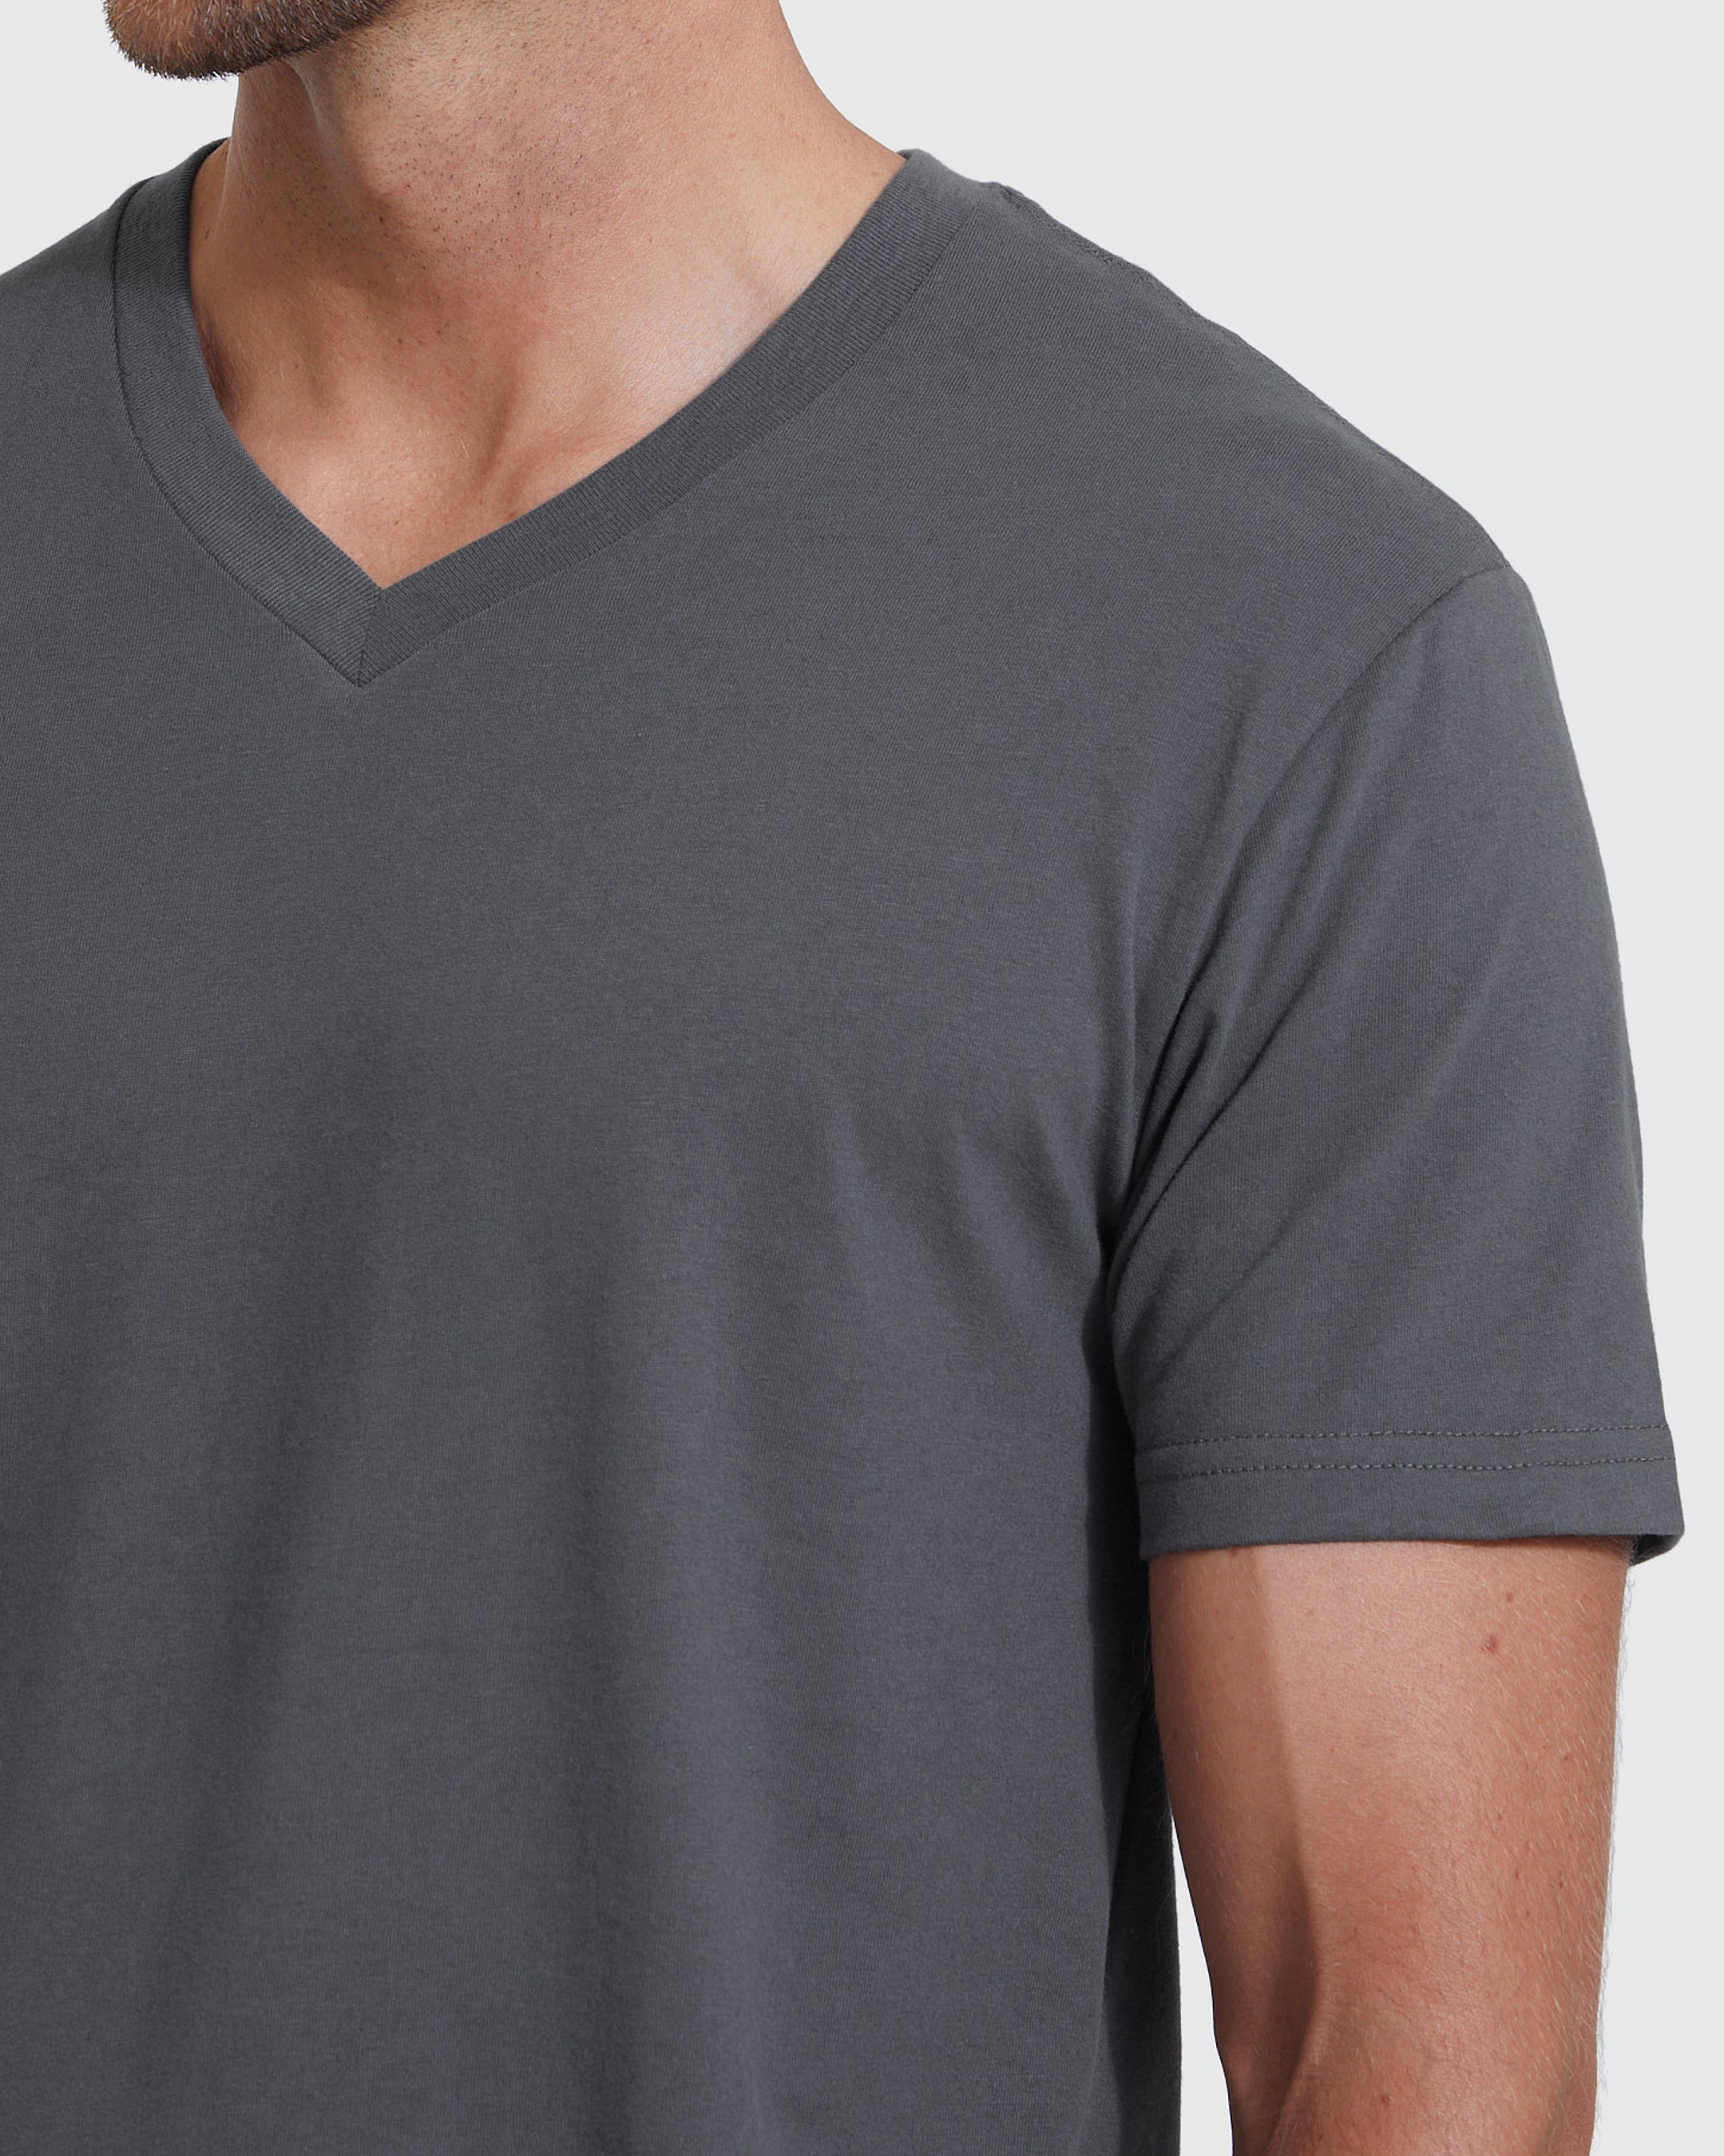 Carbon V-Neck T-Shirt – True Classic